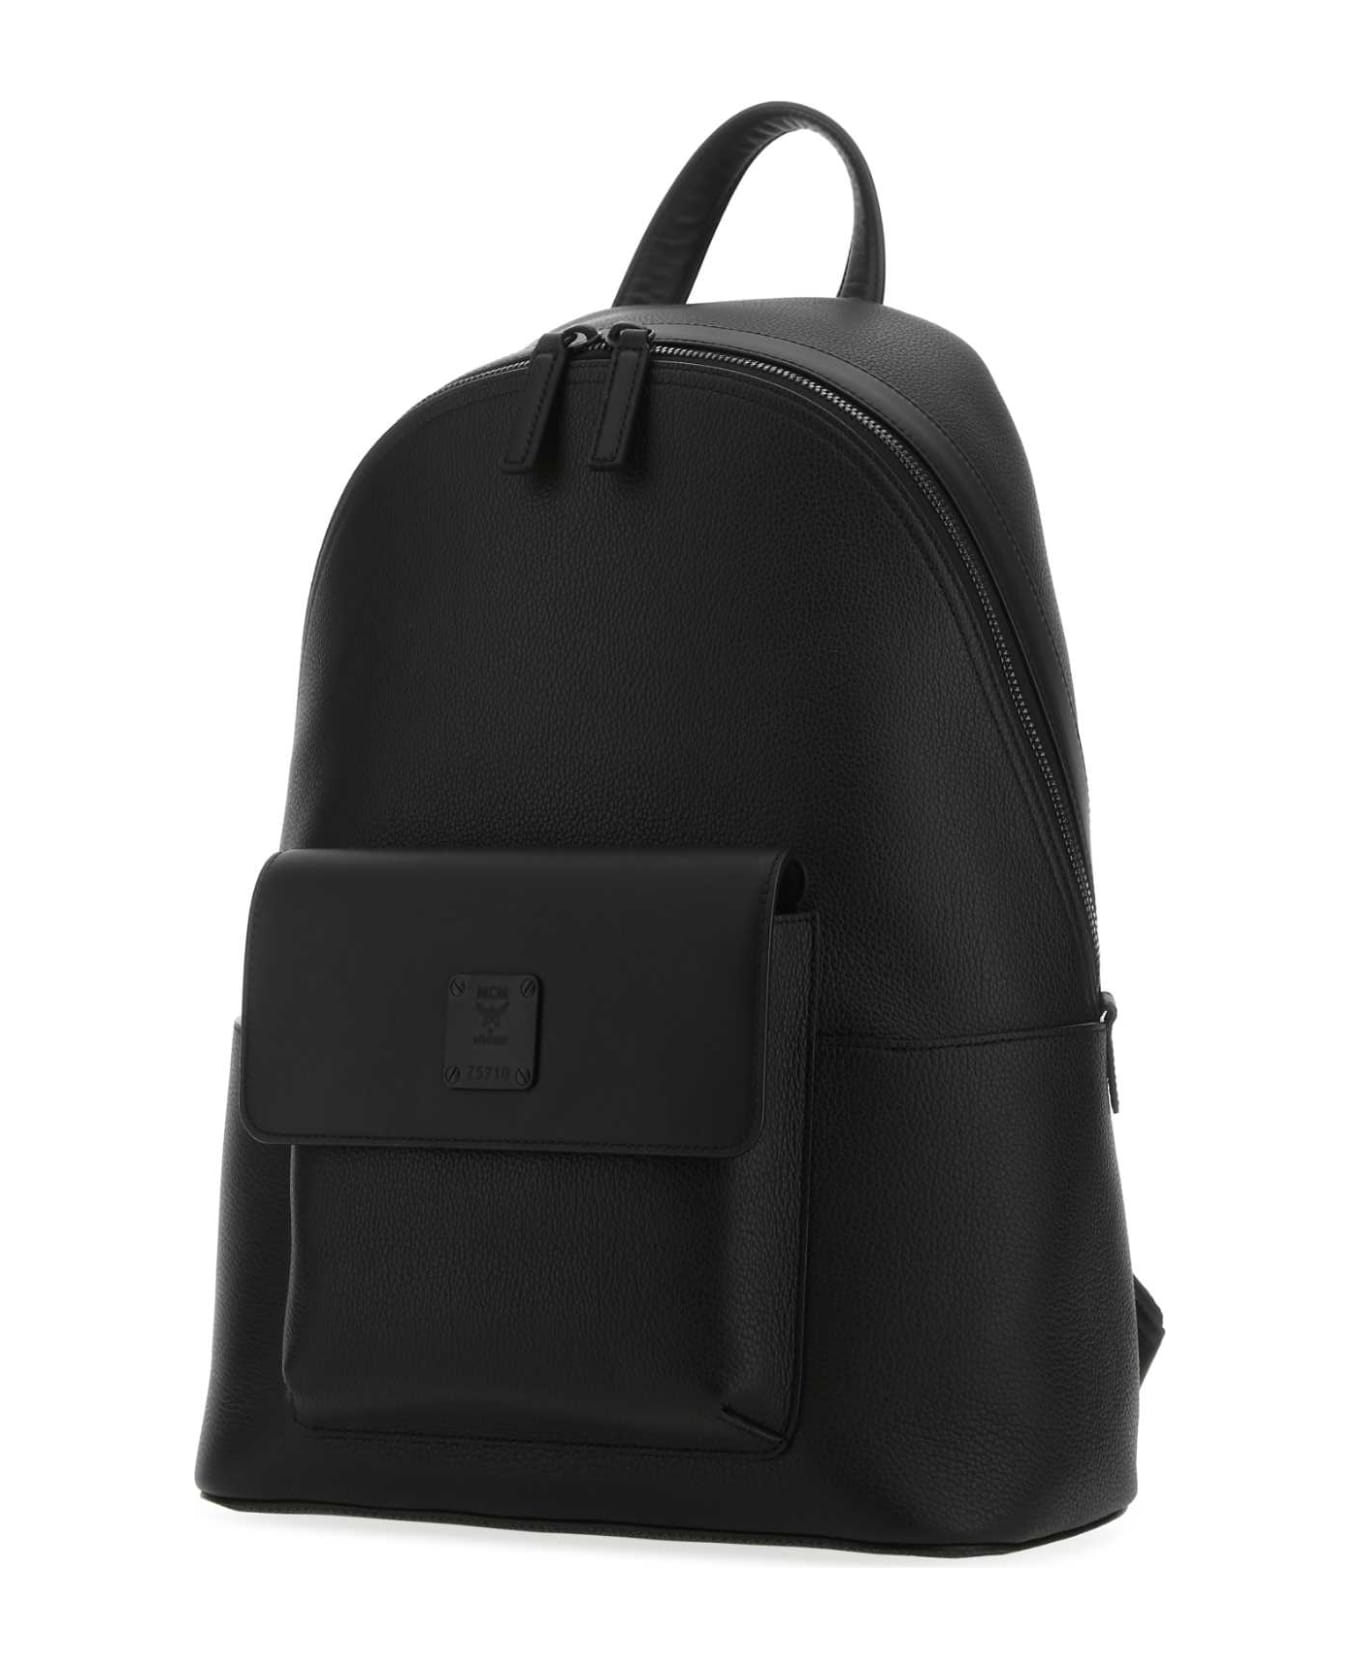 MCM Black Leather Stark Backpack - BK バックパック